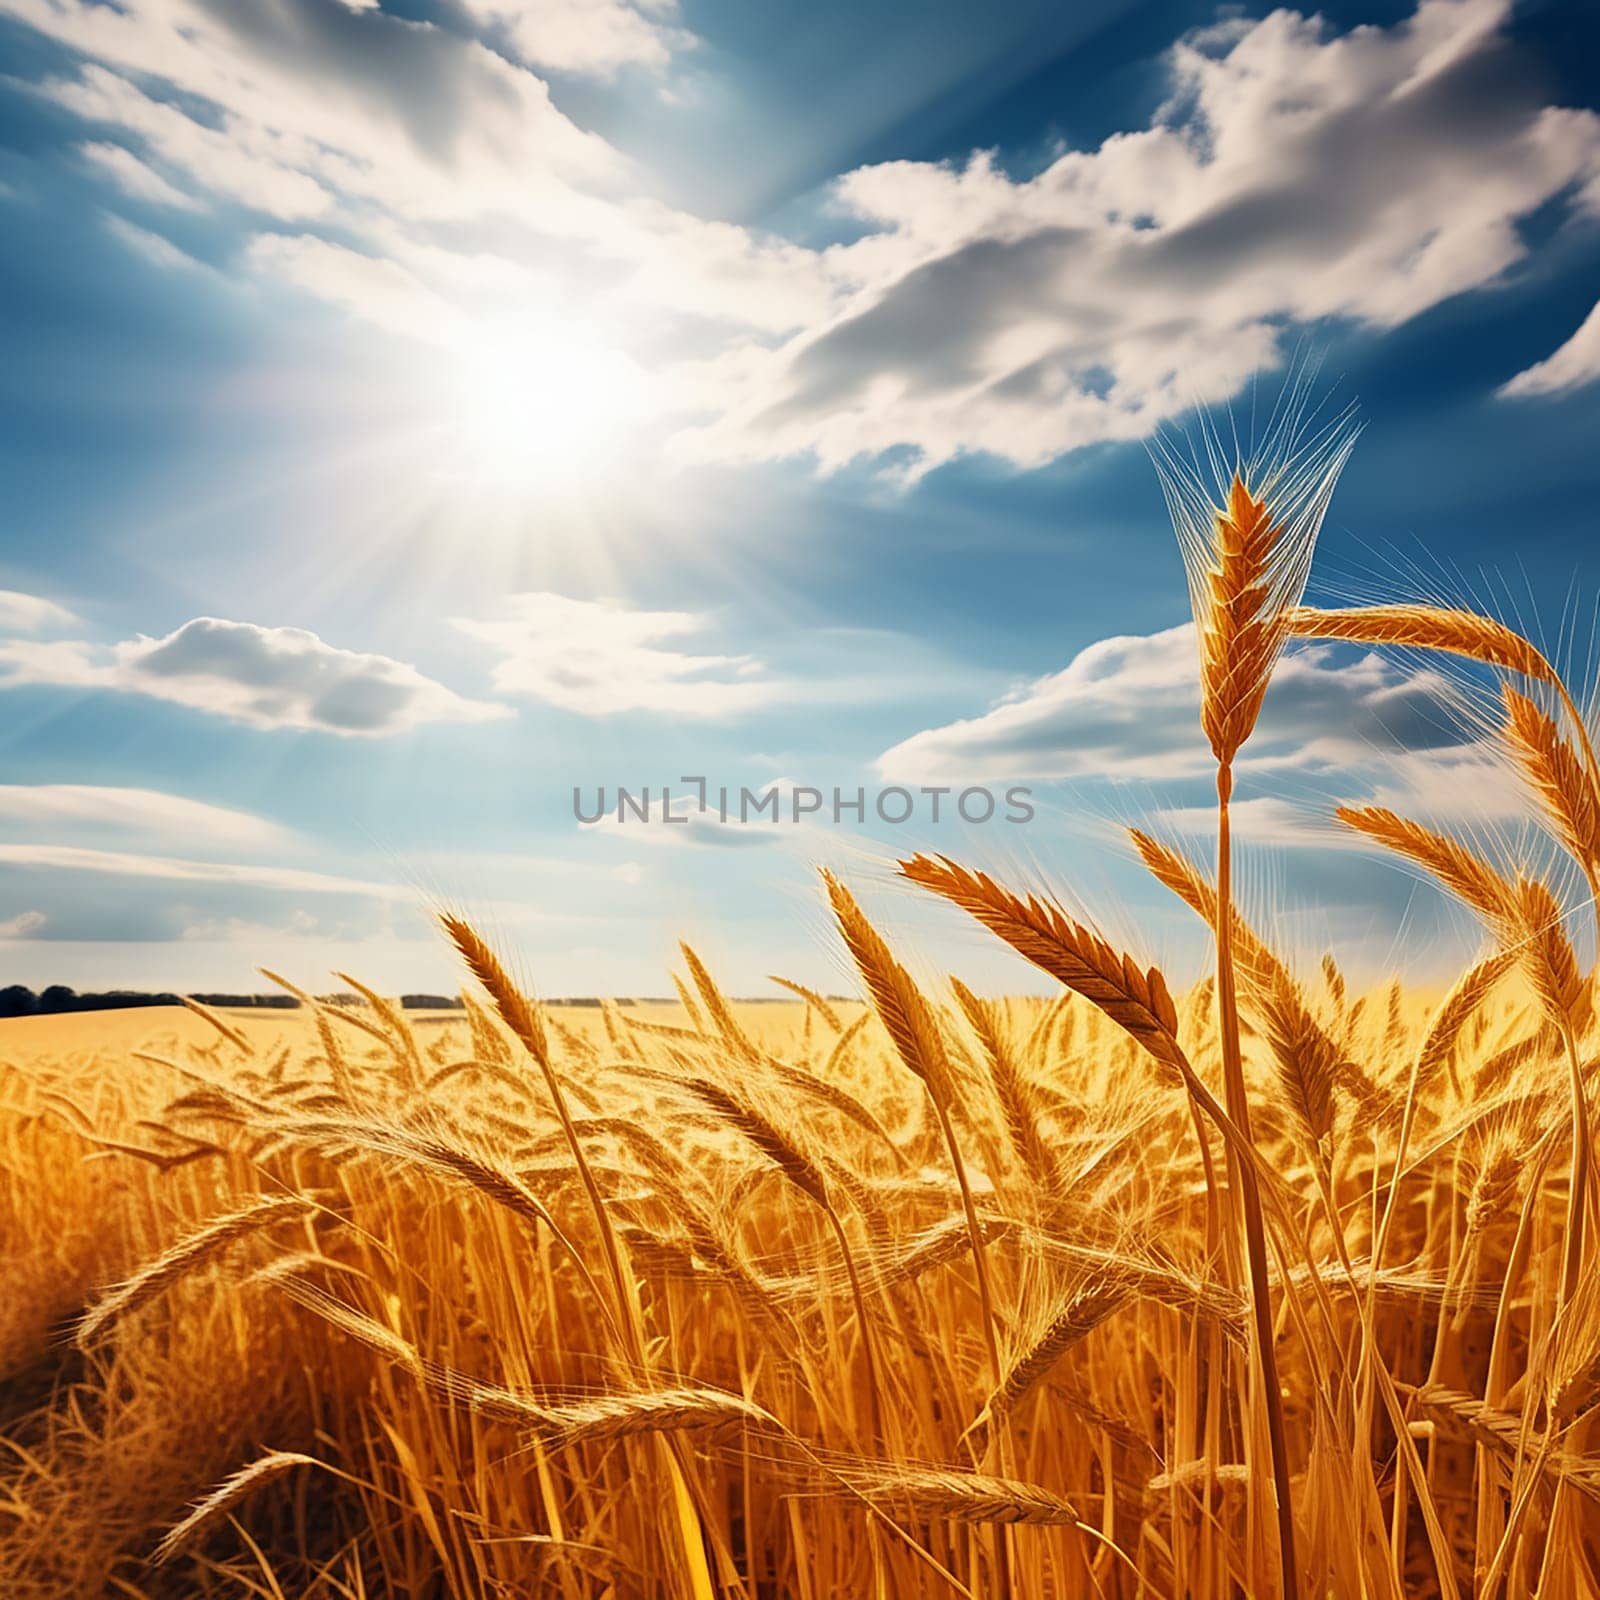 Sunlit Harvest: Basking in the Beauty of a Golden Wheat Field